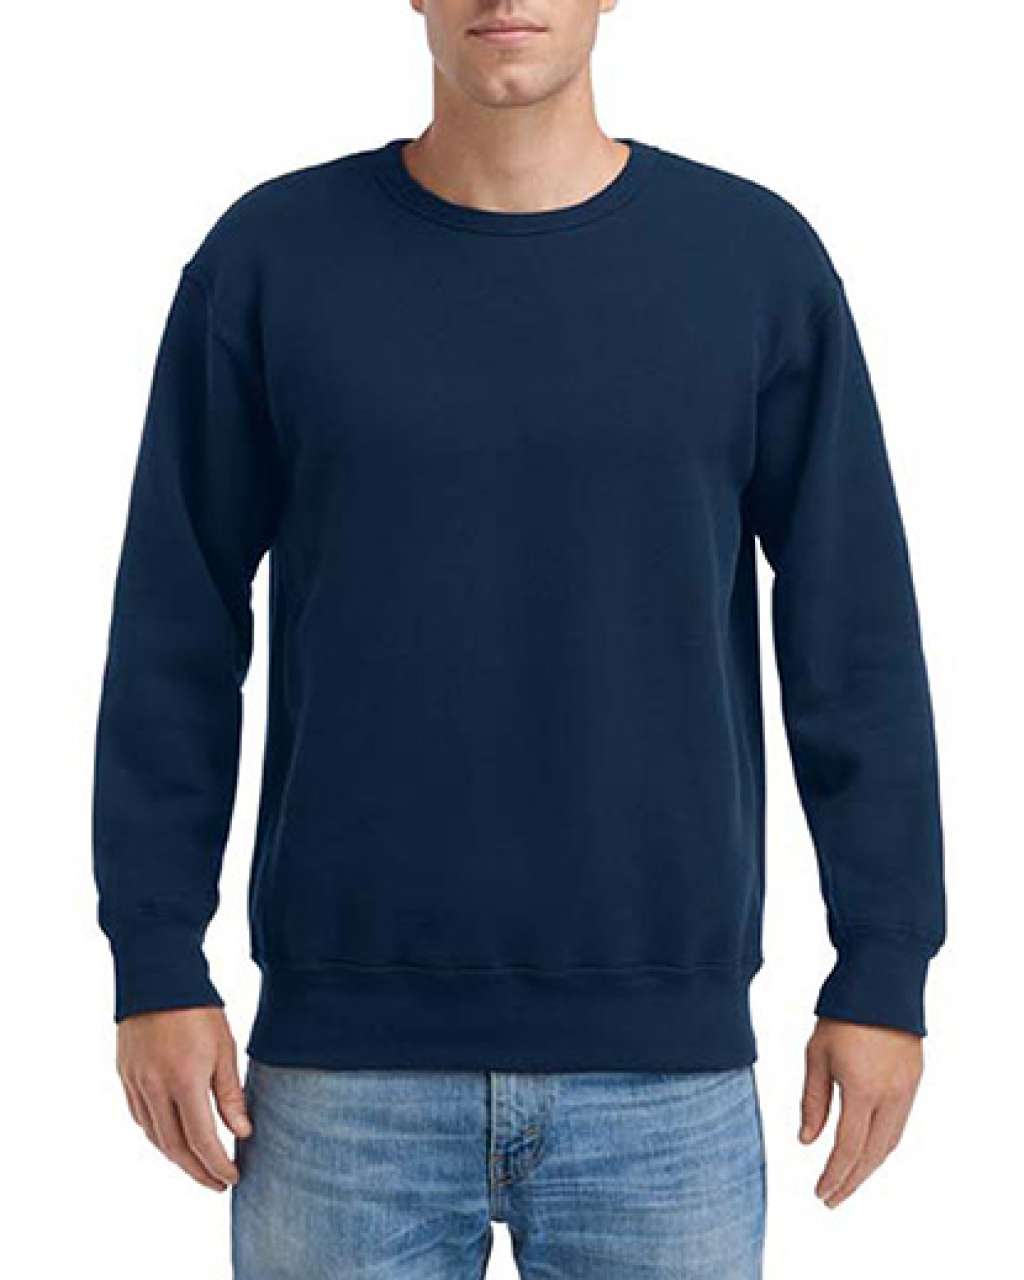 Gildan Herren Sweatshirt Sweat Pullover Sweater Pulli Pullover